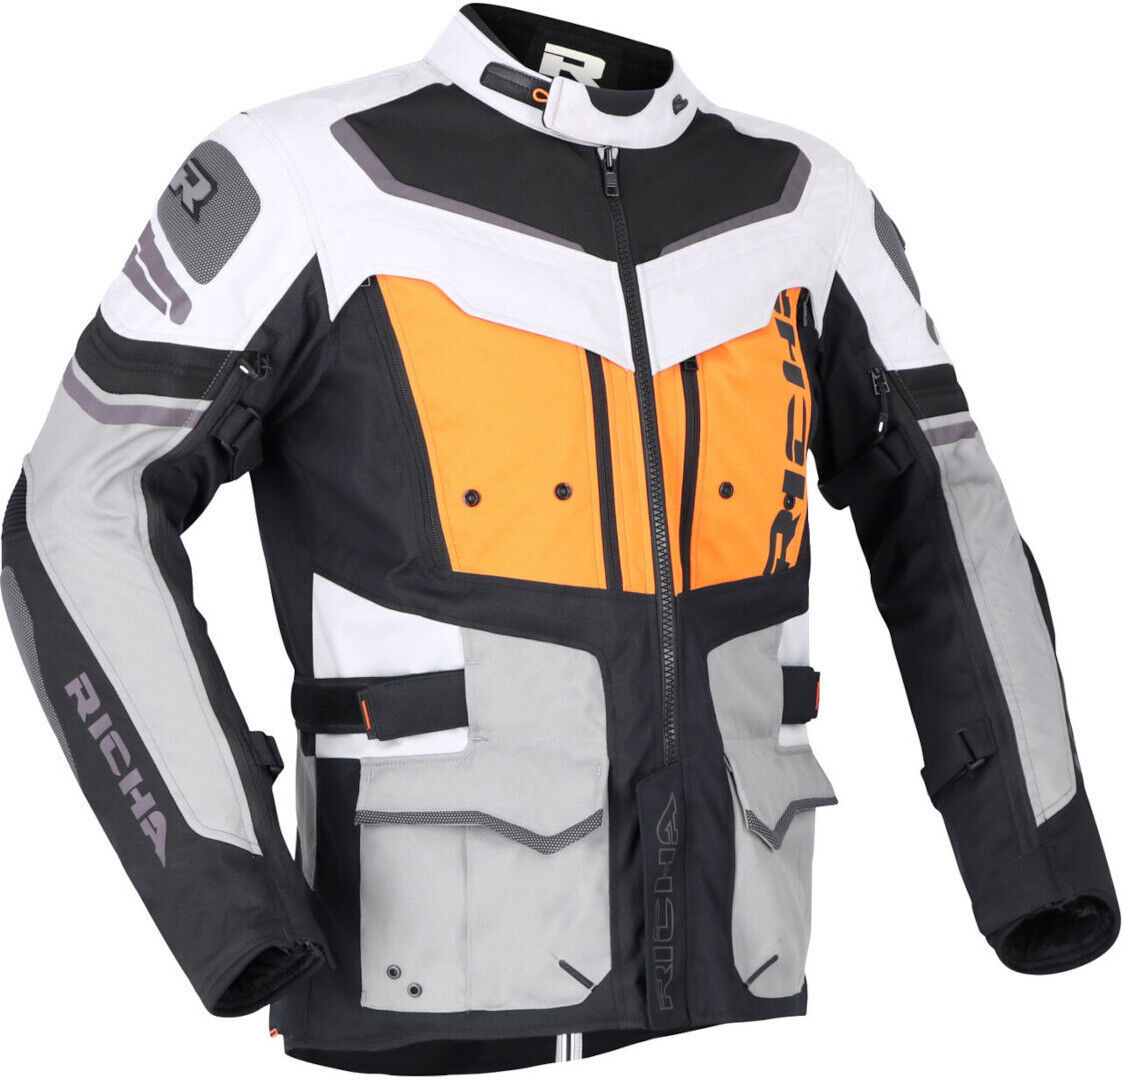 Richa Infinity 2 Adventure chaqueta textil impermeable para motocicleta - Negro Gris Naranja (S)